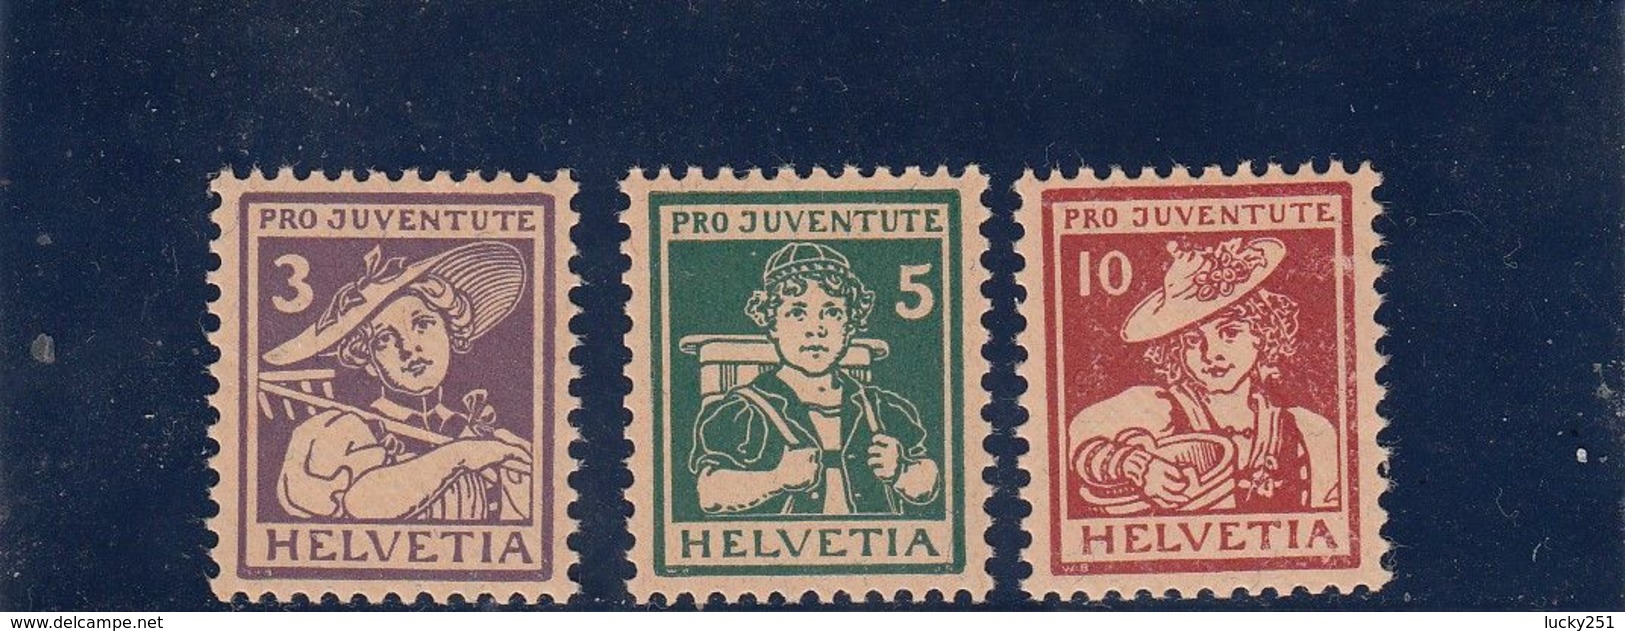 Suisse - Année 1916 - Neuf** - Pro Juventute - N° Zumstein 4/6** - Costumes - Unused Stamps